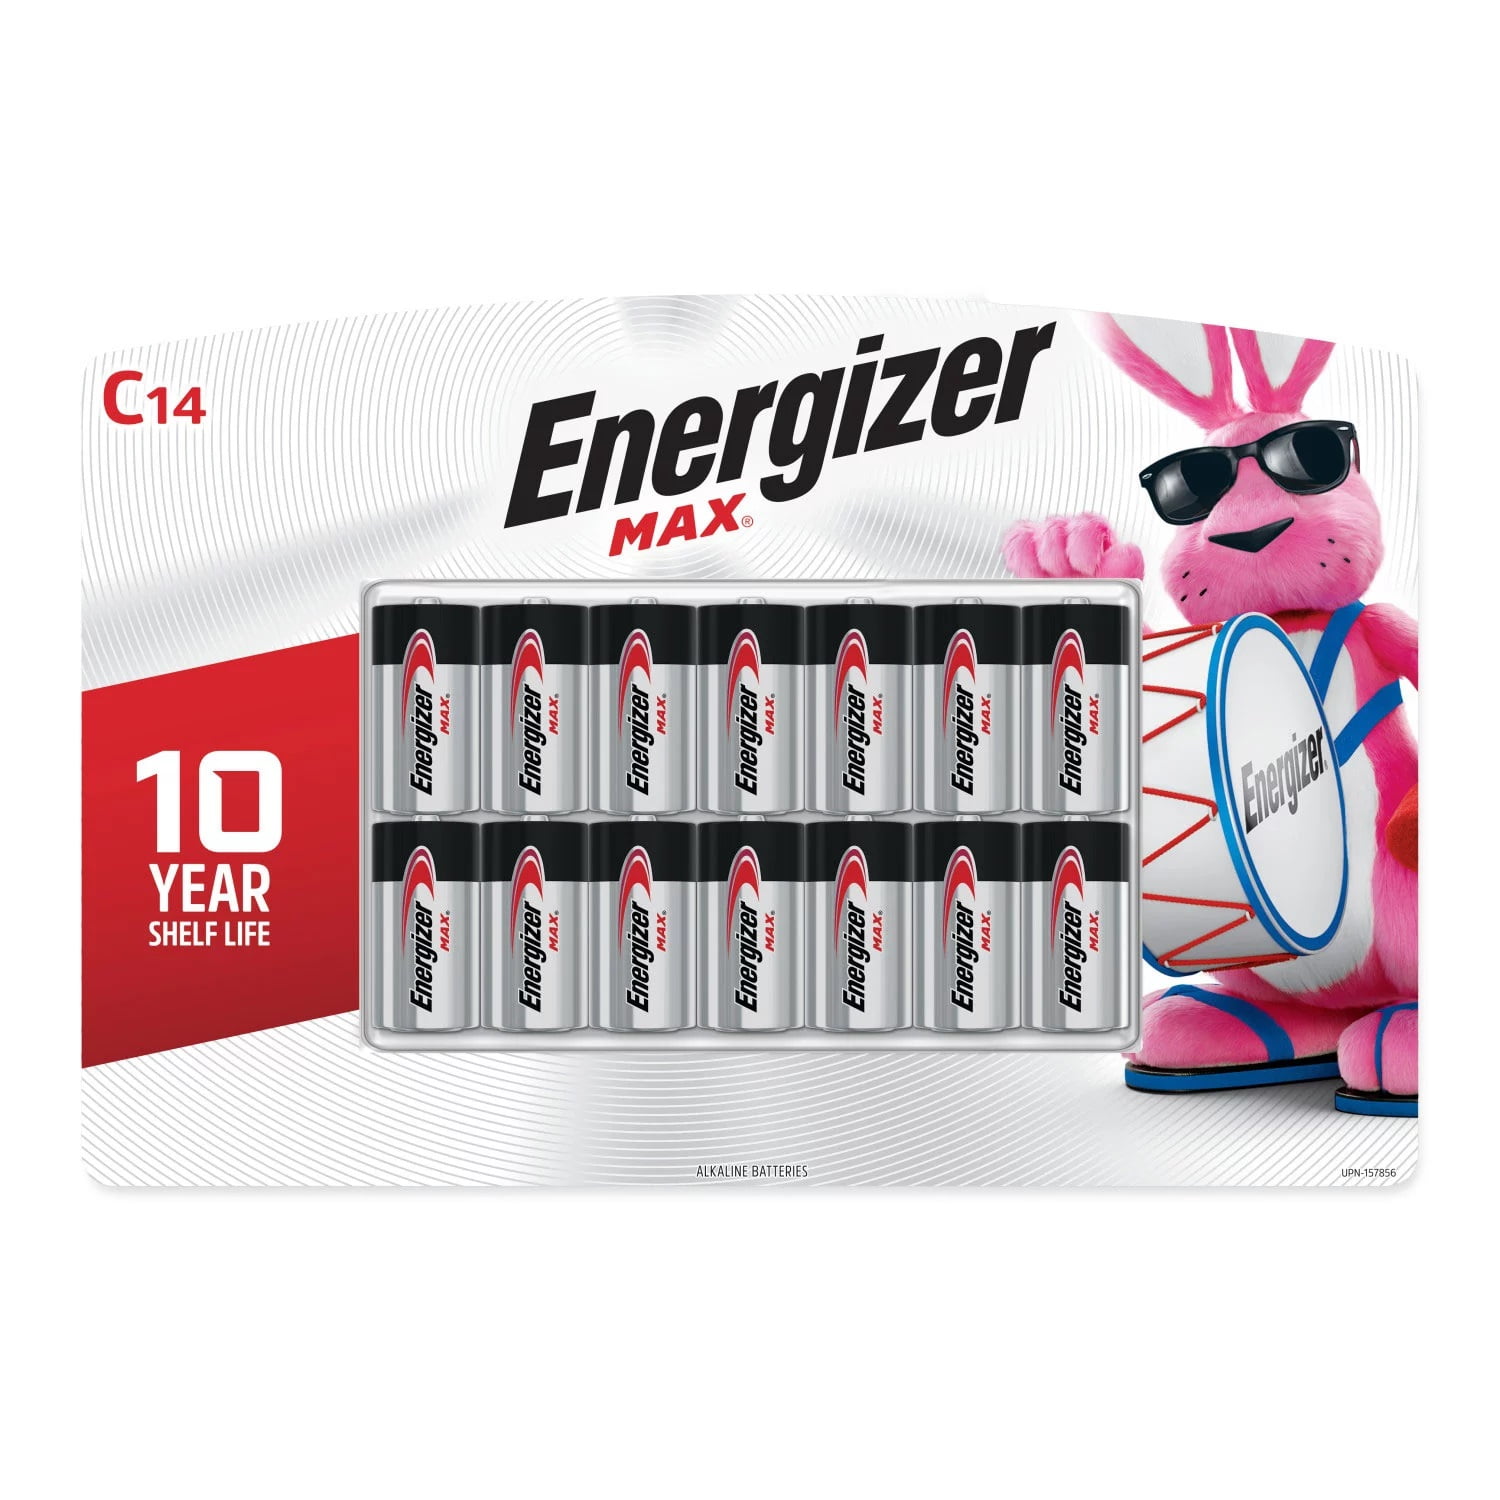 Energizer MAX C Batteries C Cell Alkaline Batteries (14 Count)